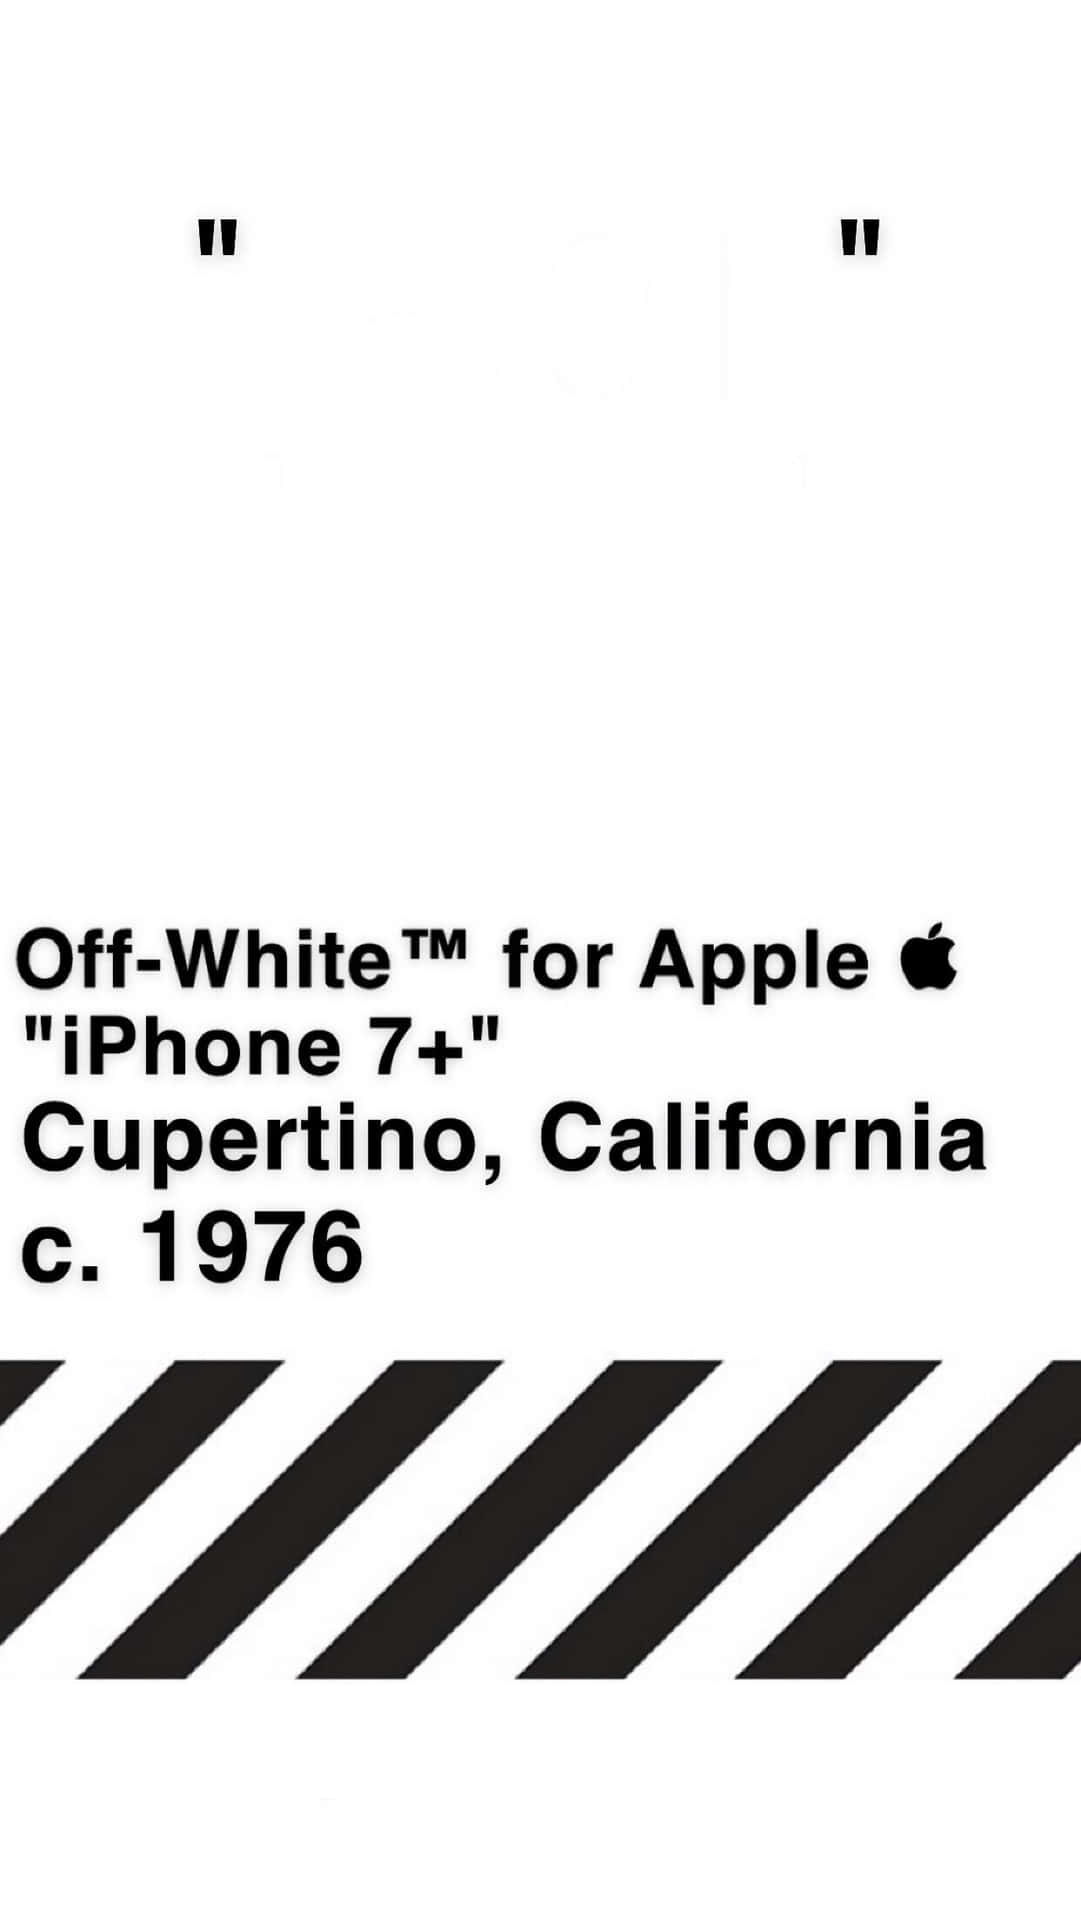 Appleipad-enhet I Offwhite-färg Wallpaper